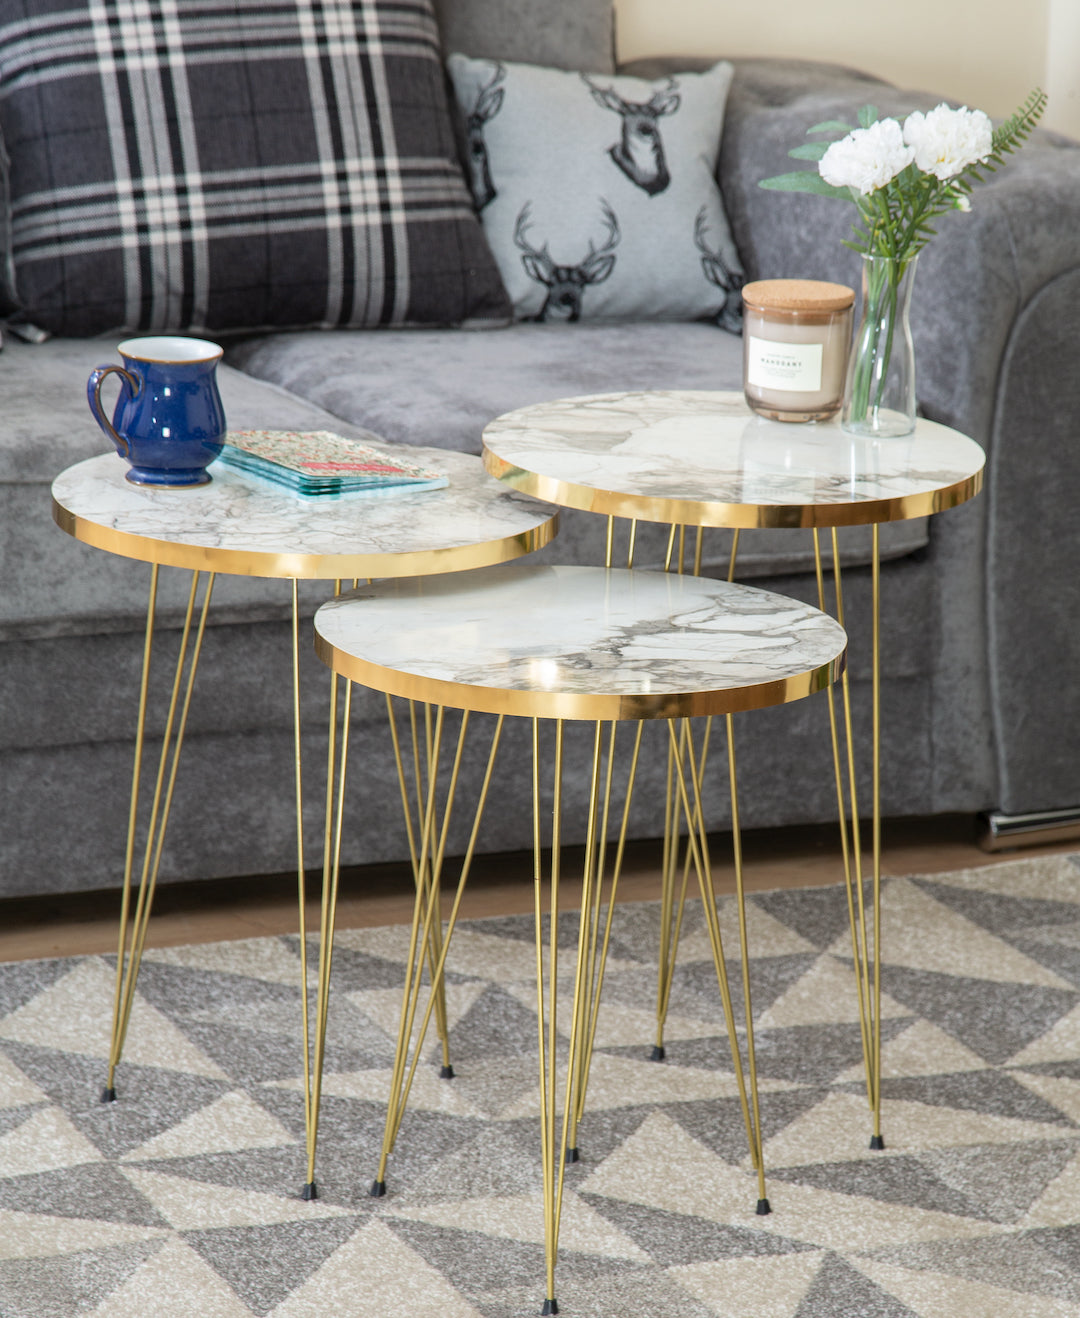 Terek Set of 3 Round Side Tables - White Marble & Gold